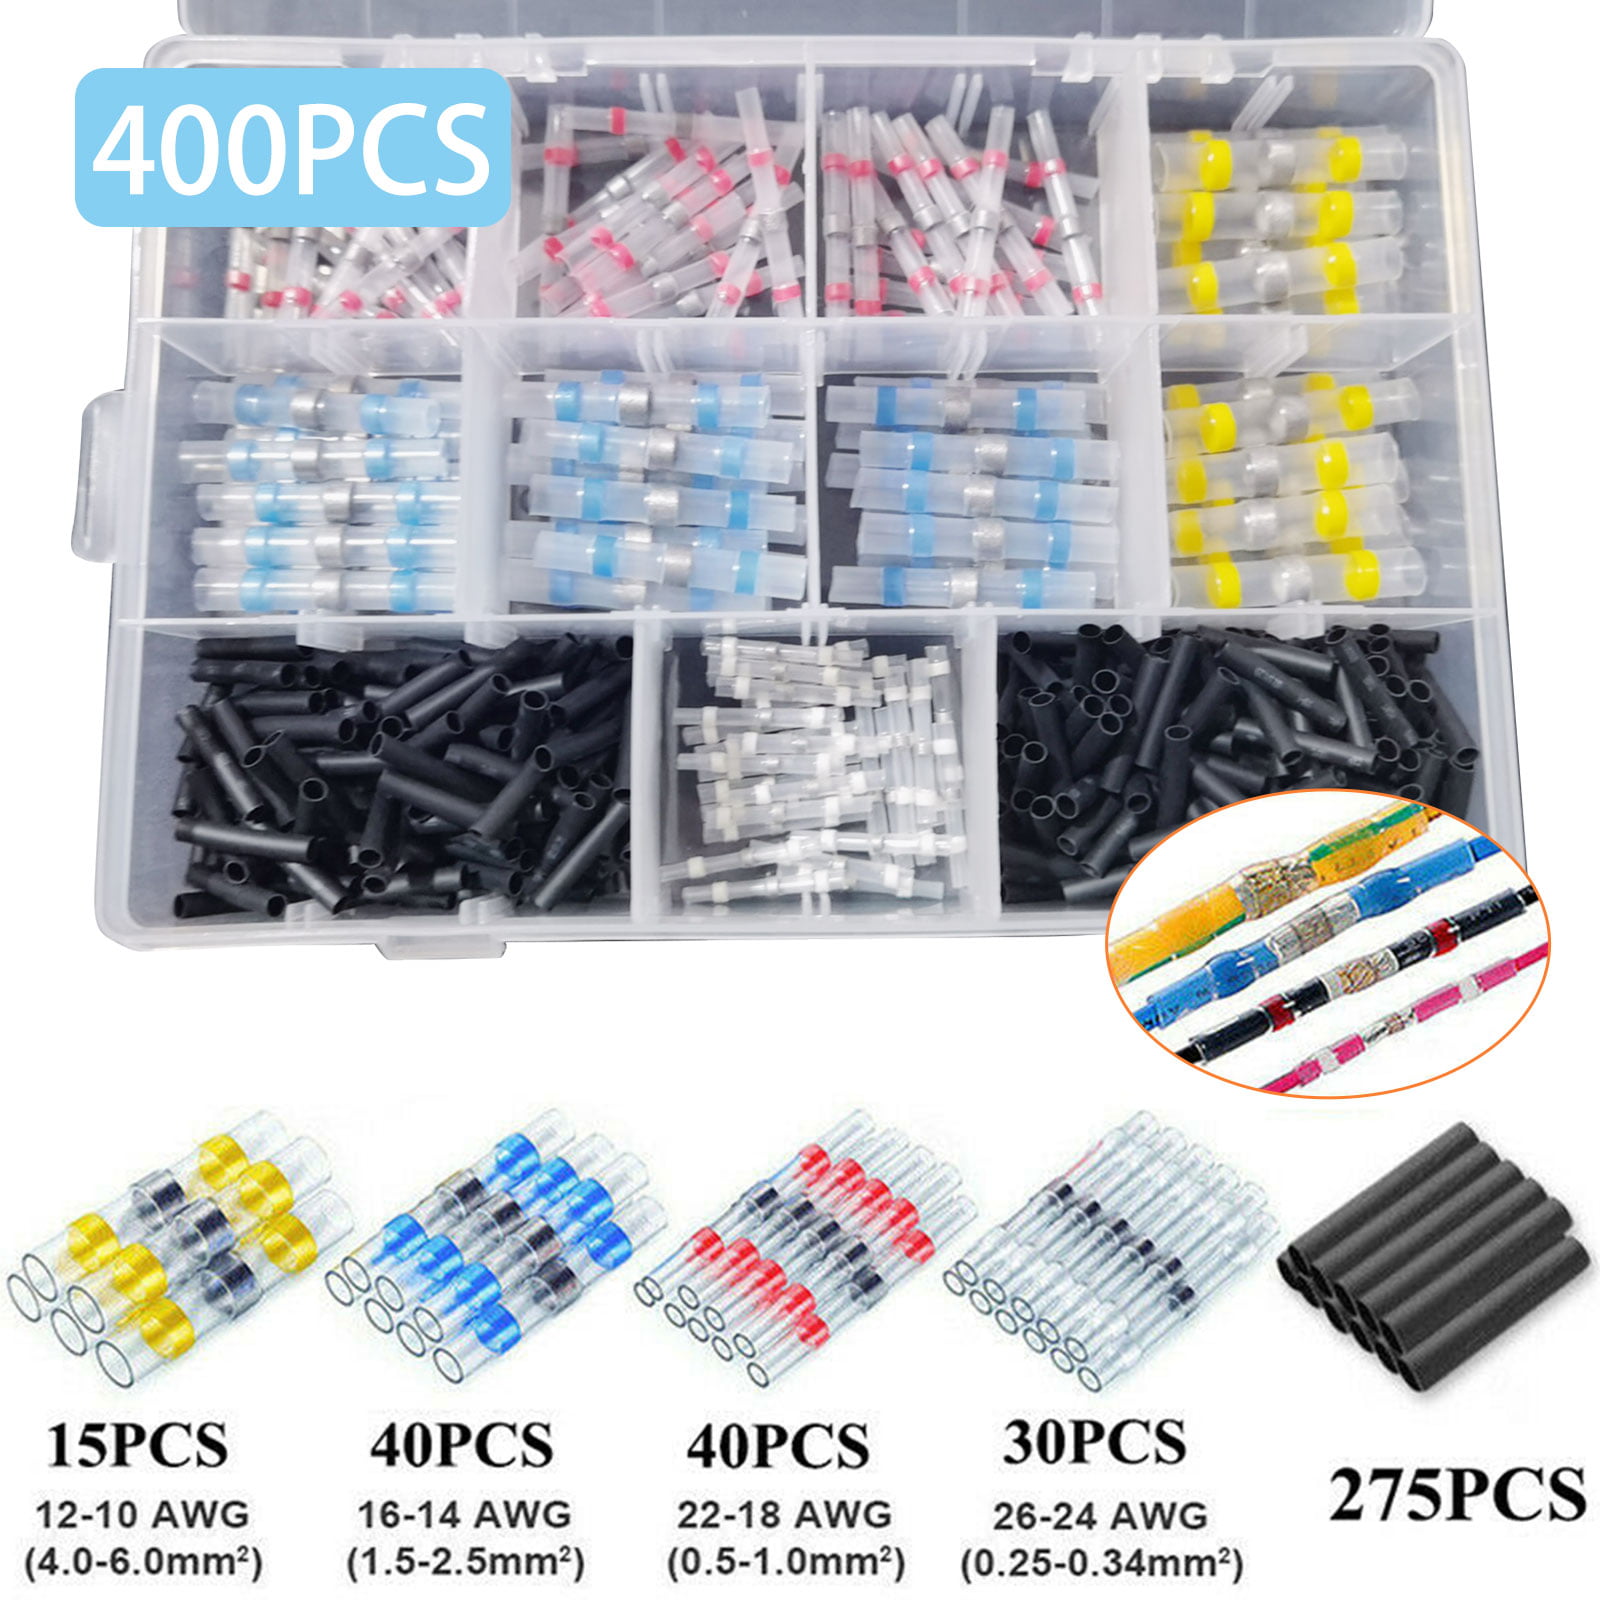 200PCS Solder Seal Wire Connectors Heat Shrink Butt Connectors Waterproof Kit 